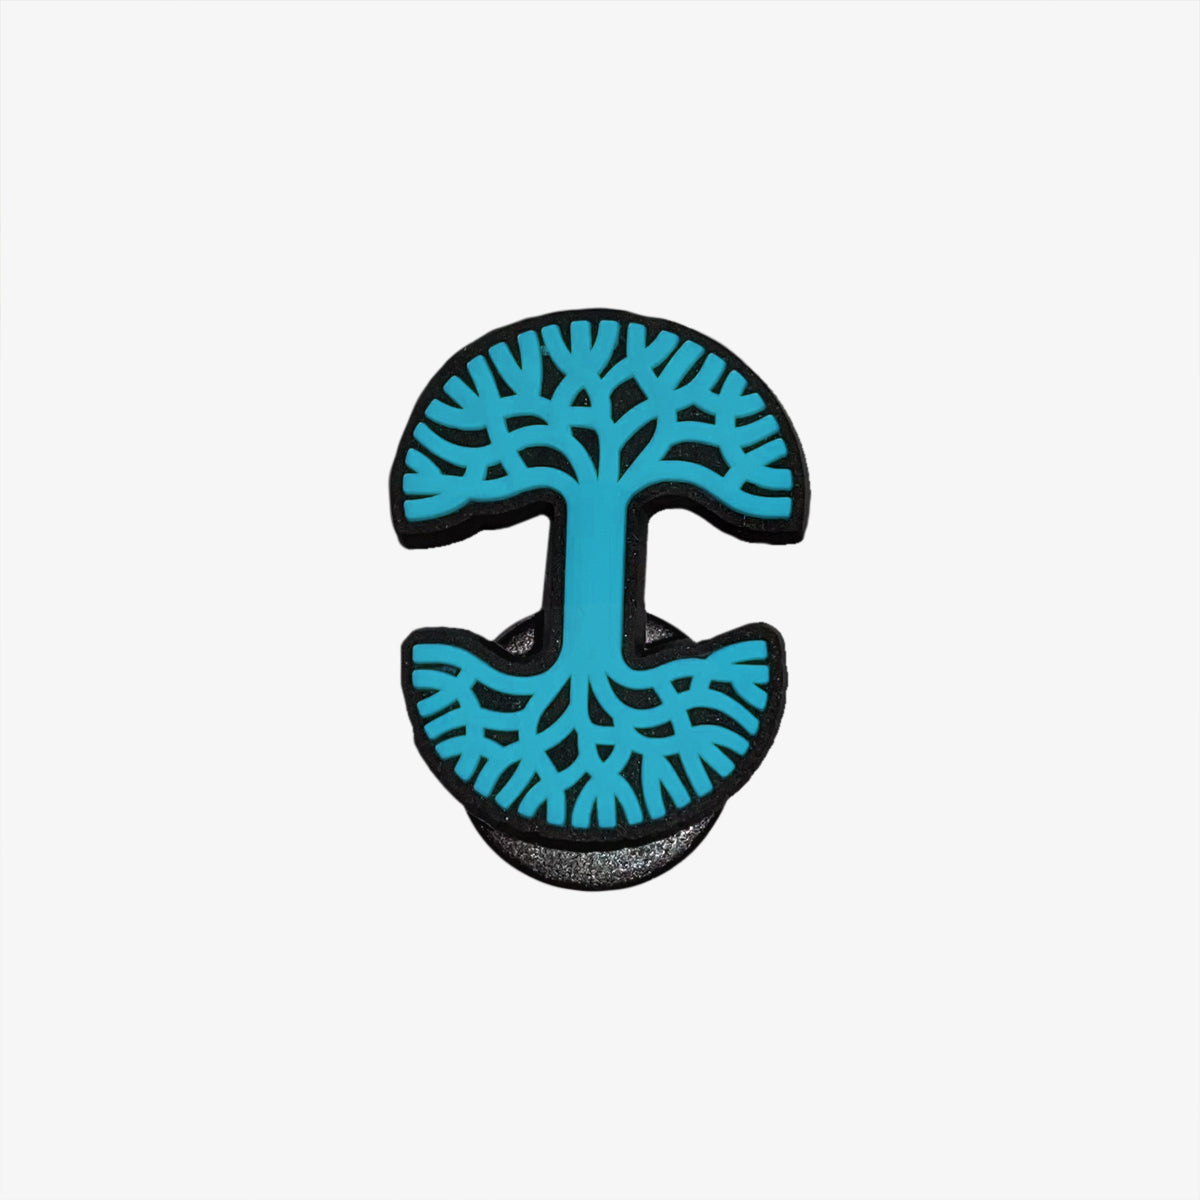 Teal and black Oaklandish tree logo shoe charm. 